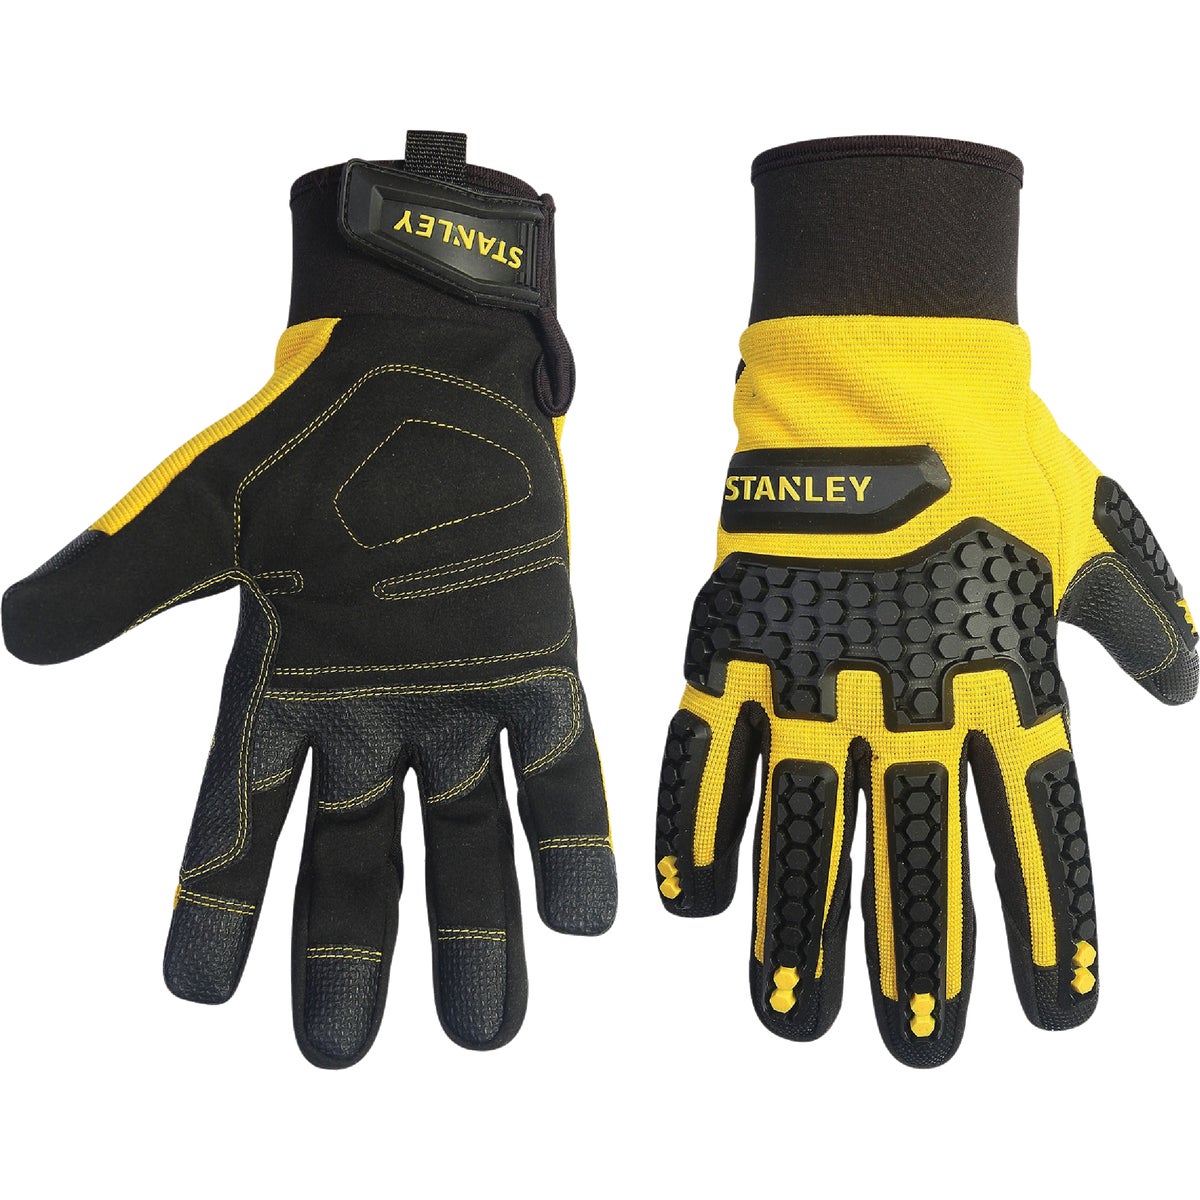 Item 748131, Synthetic leather Impact Pro mechanics glove.